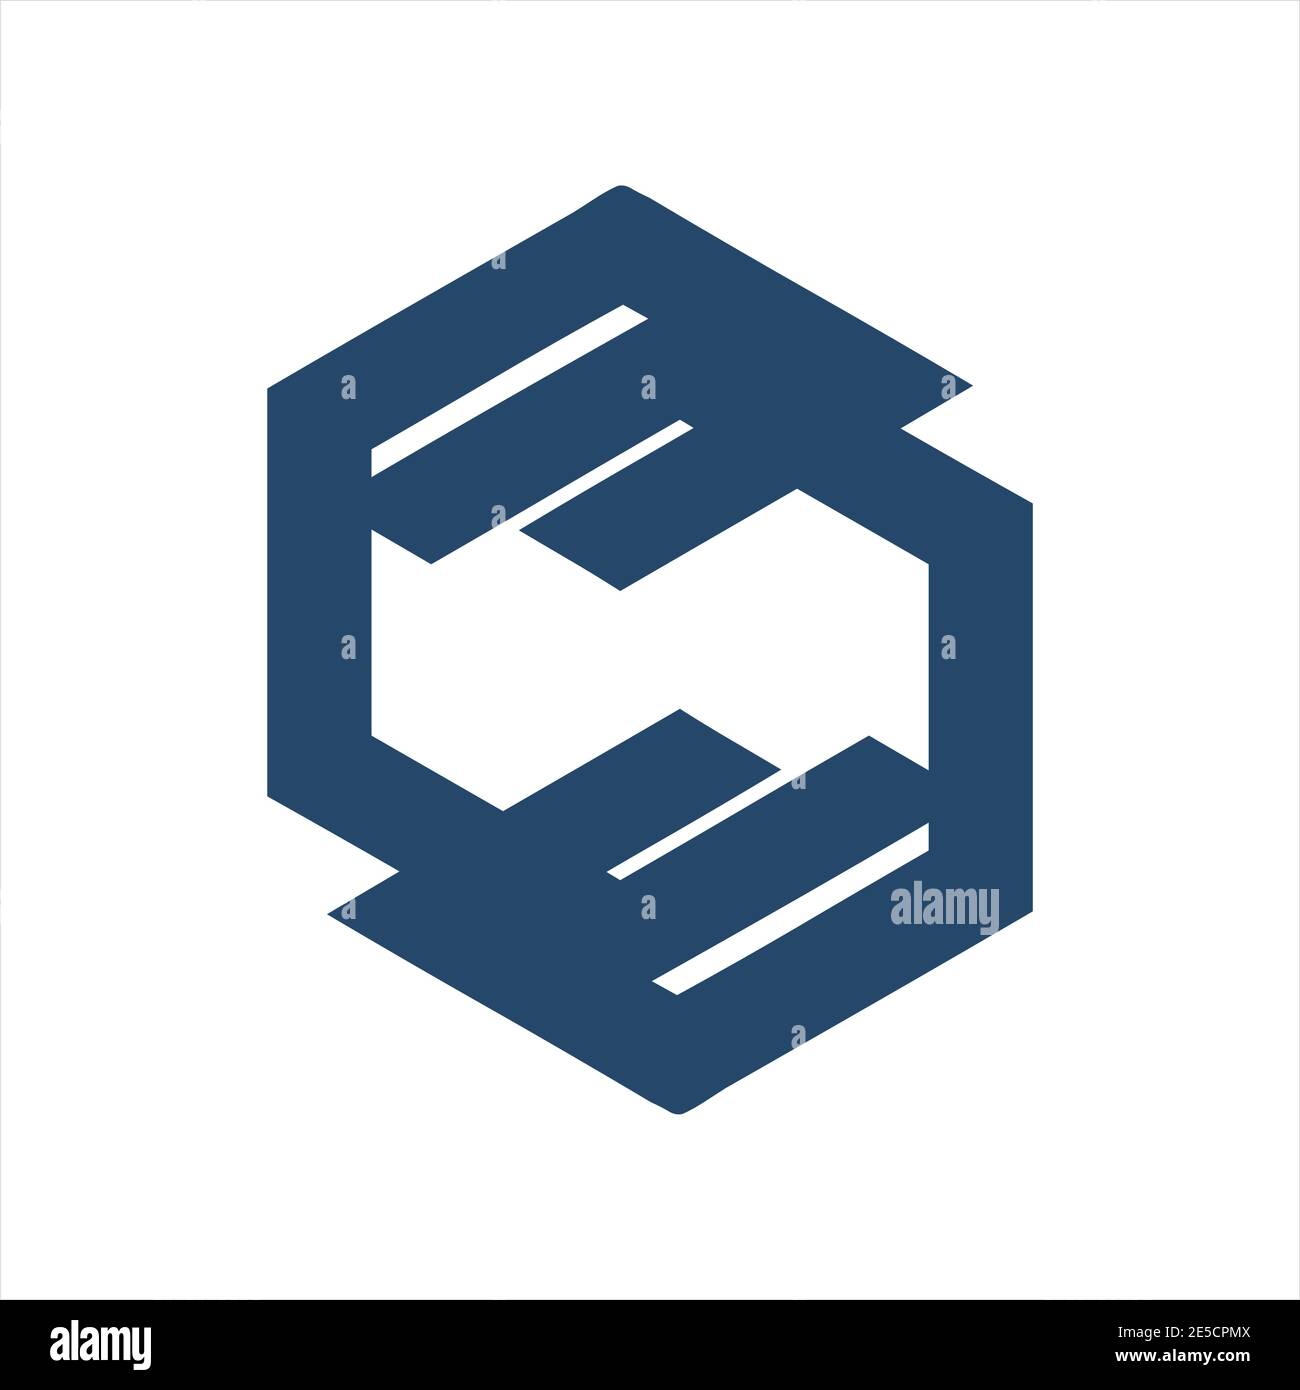 S, GSG, CSG, CSC initials geometric letter company logo Stock Vector